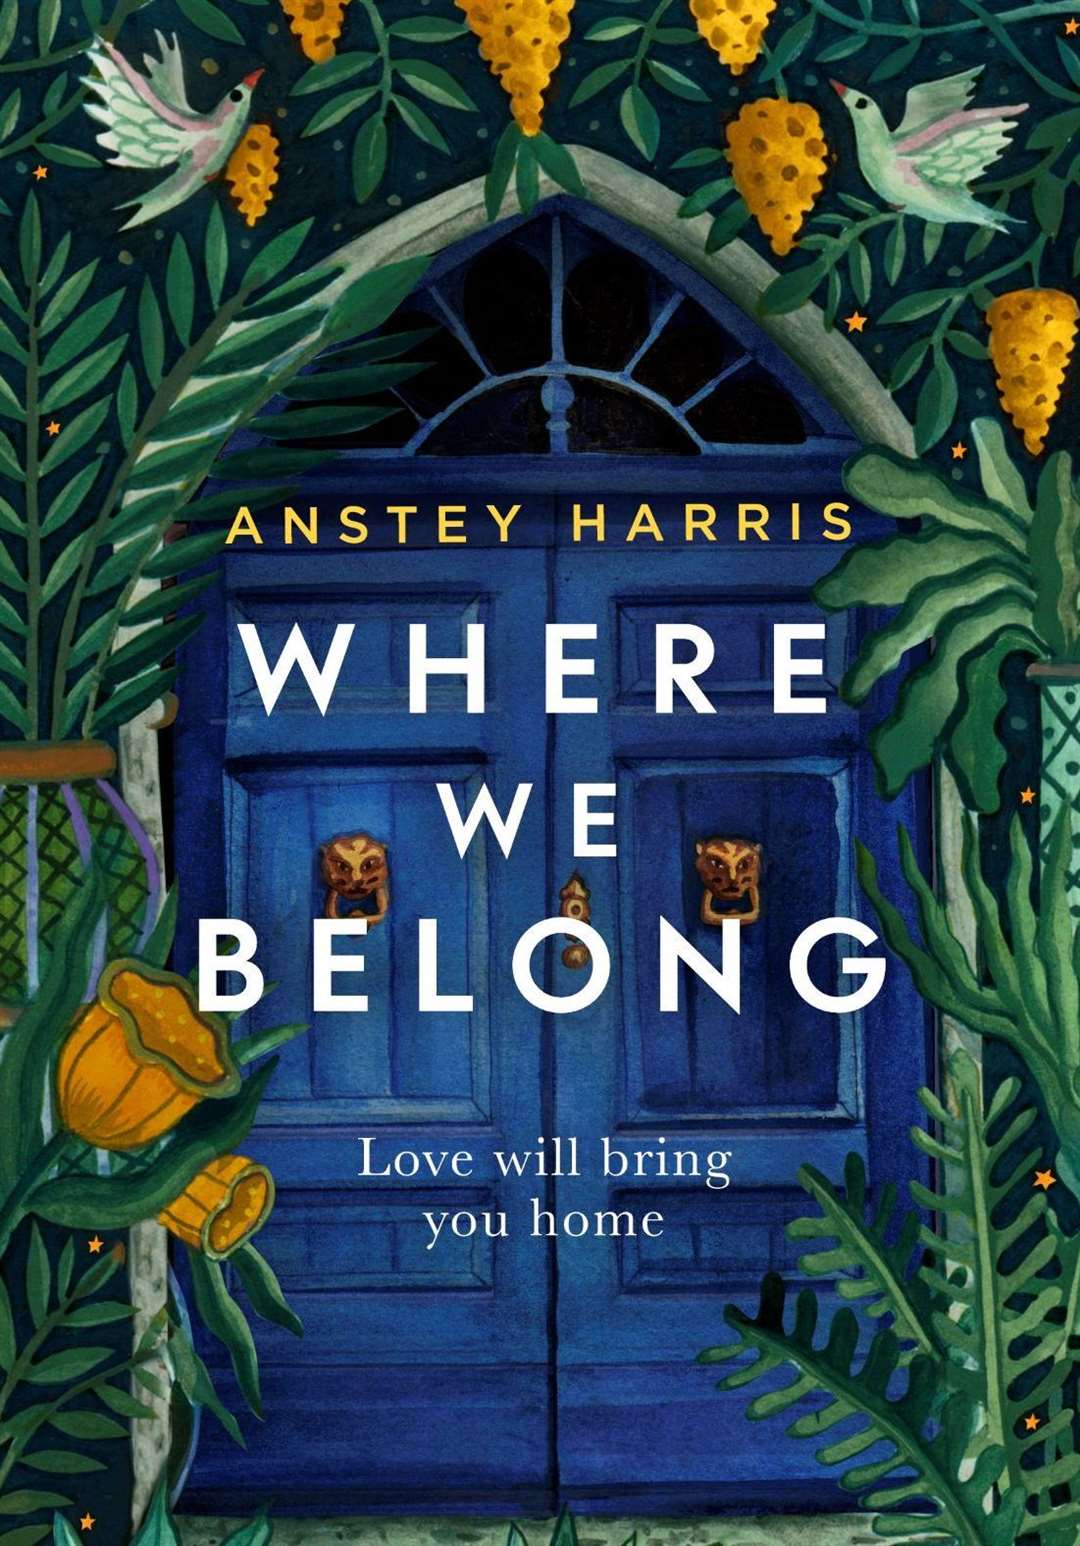 Anstey Harris' book Where We Belong